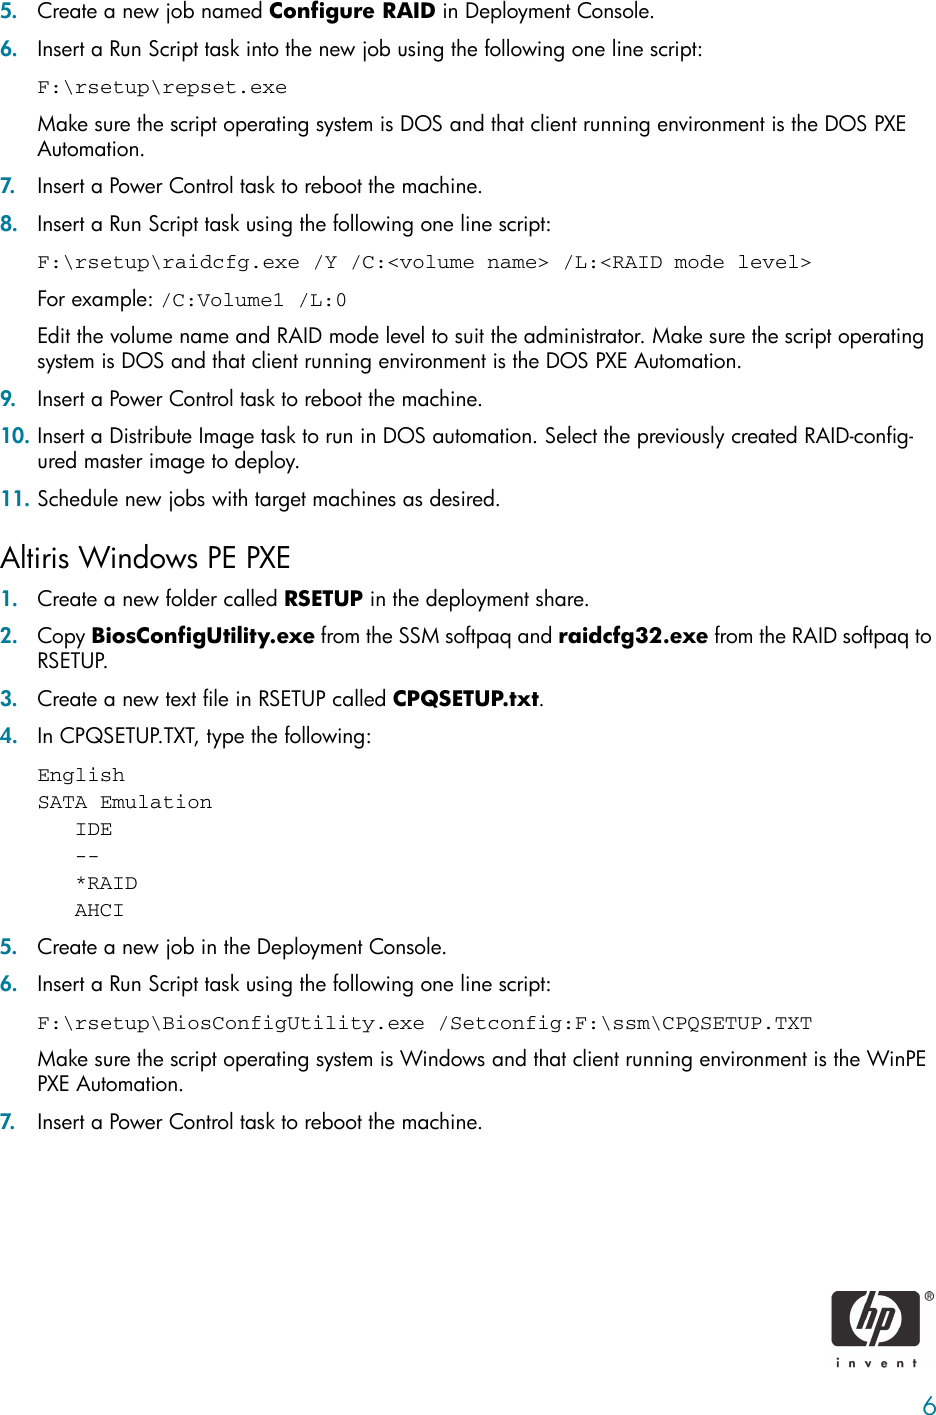 Page 6 of 7 - HP RAID Image Deployment On Compaq Dc7000 Series Business PCs C00767036